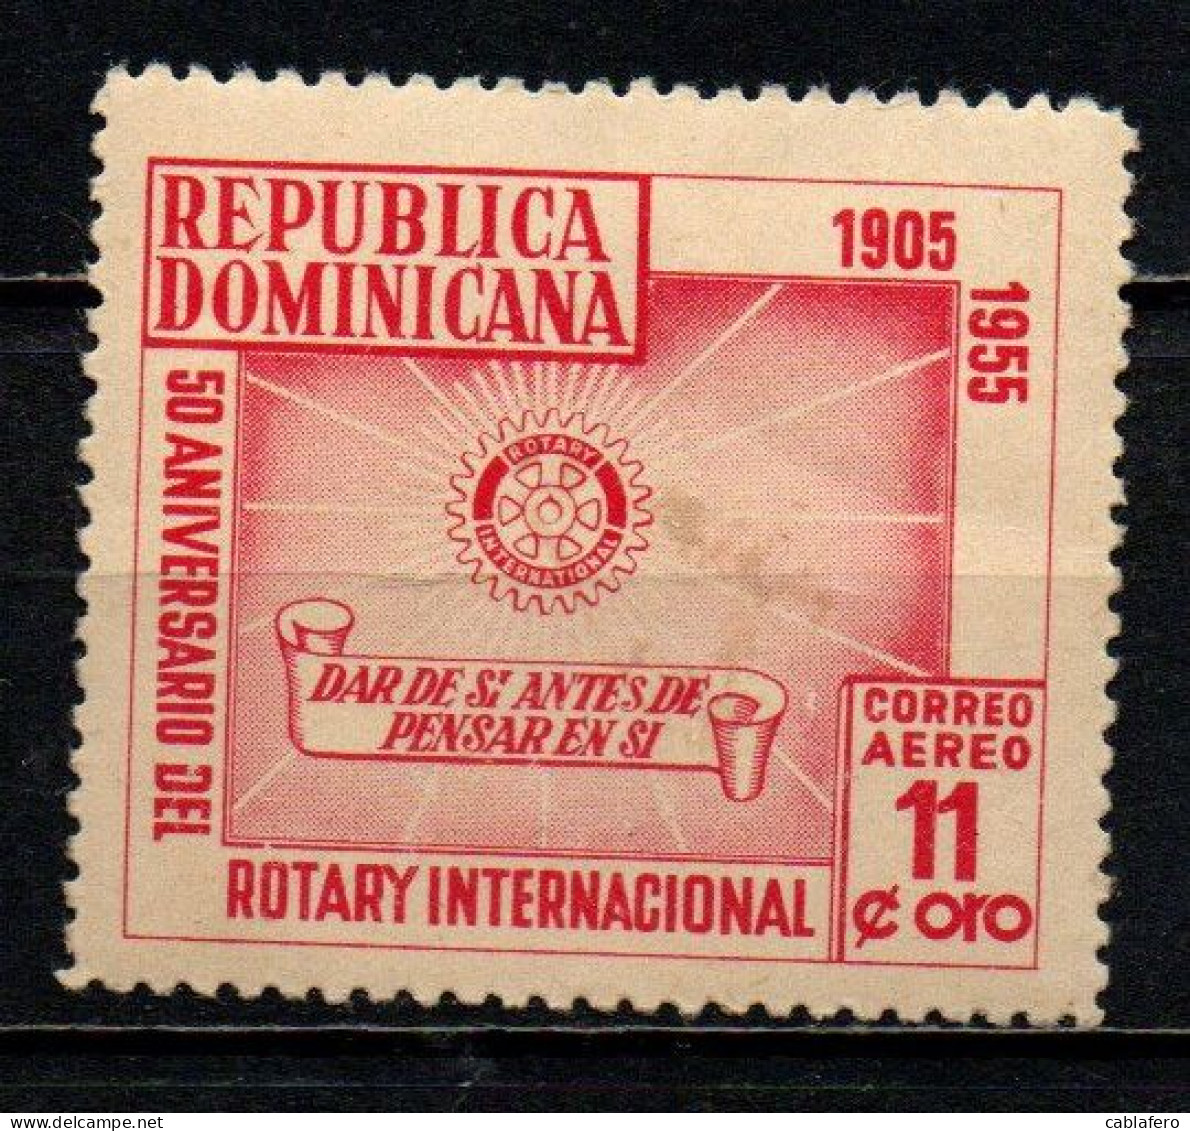 REPUBBLICA DOMENICANA - 1955 - ROTARY INTERNATIONAL - MH - Dominicaine (République)